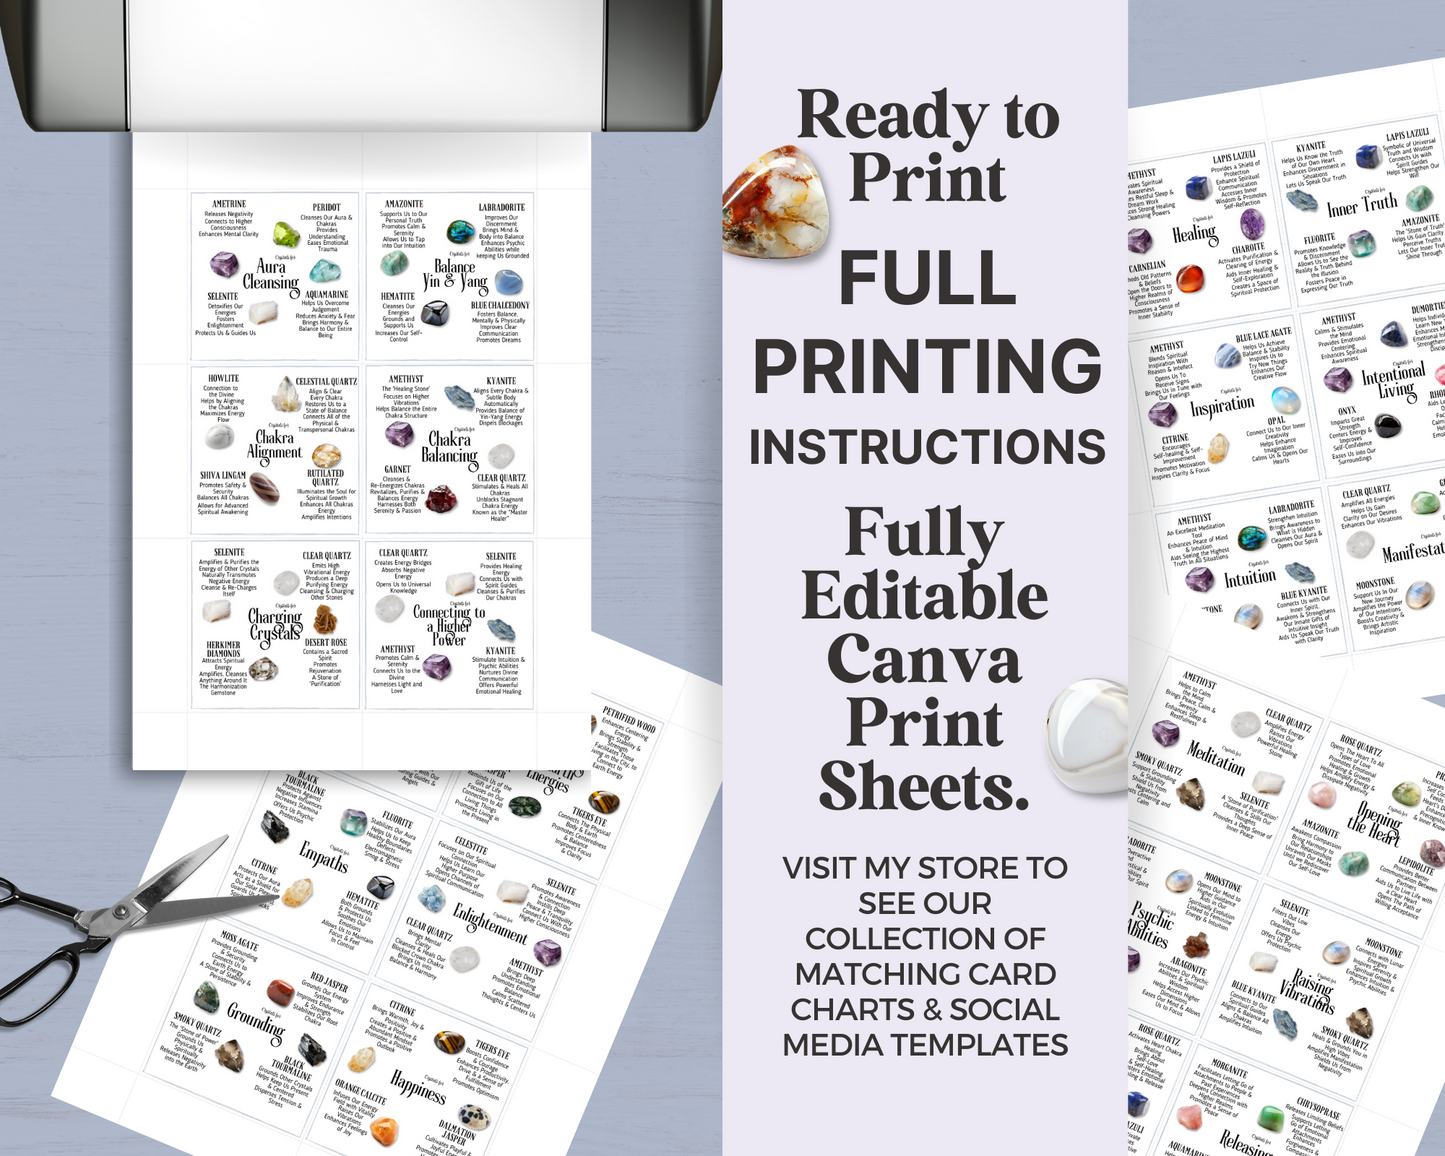 32 Crystals for Spirituality Cards, Editable Crystal Kit Card Set, Canva Printable Crystals for Spirituality